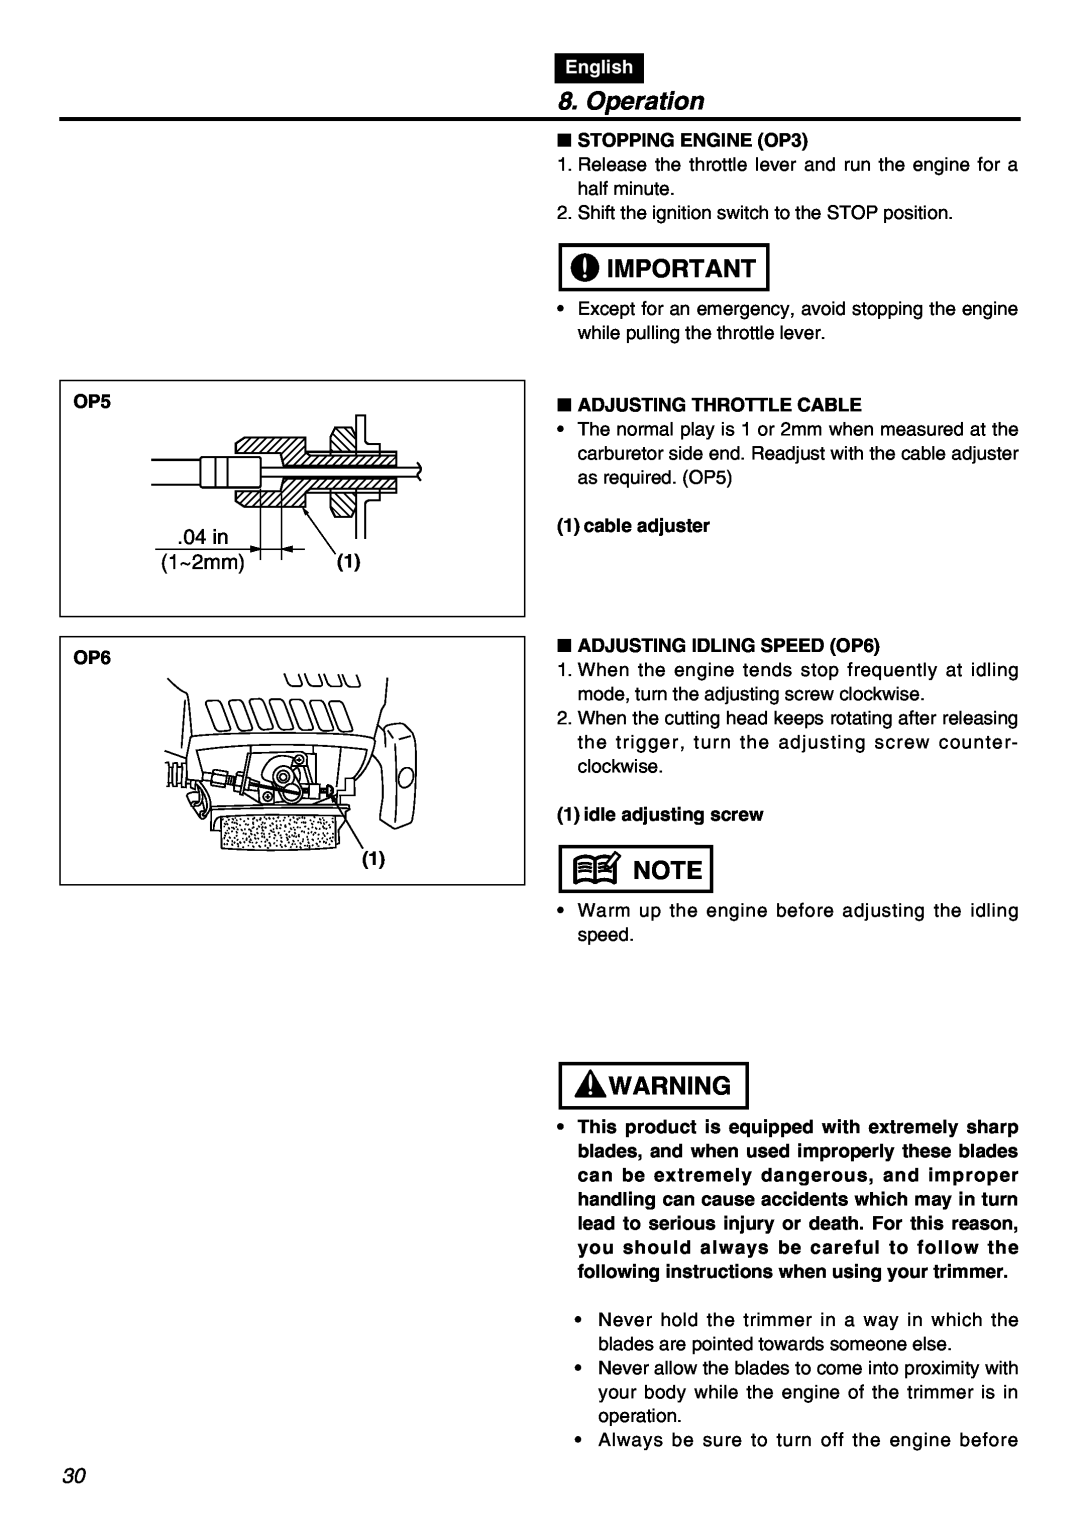 RedMax SRTZ2401F manual Operation, 04 in 1~2mm, English 